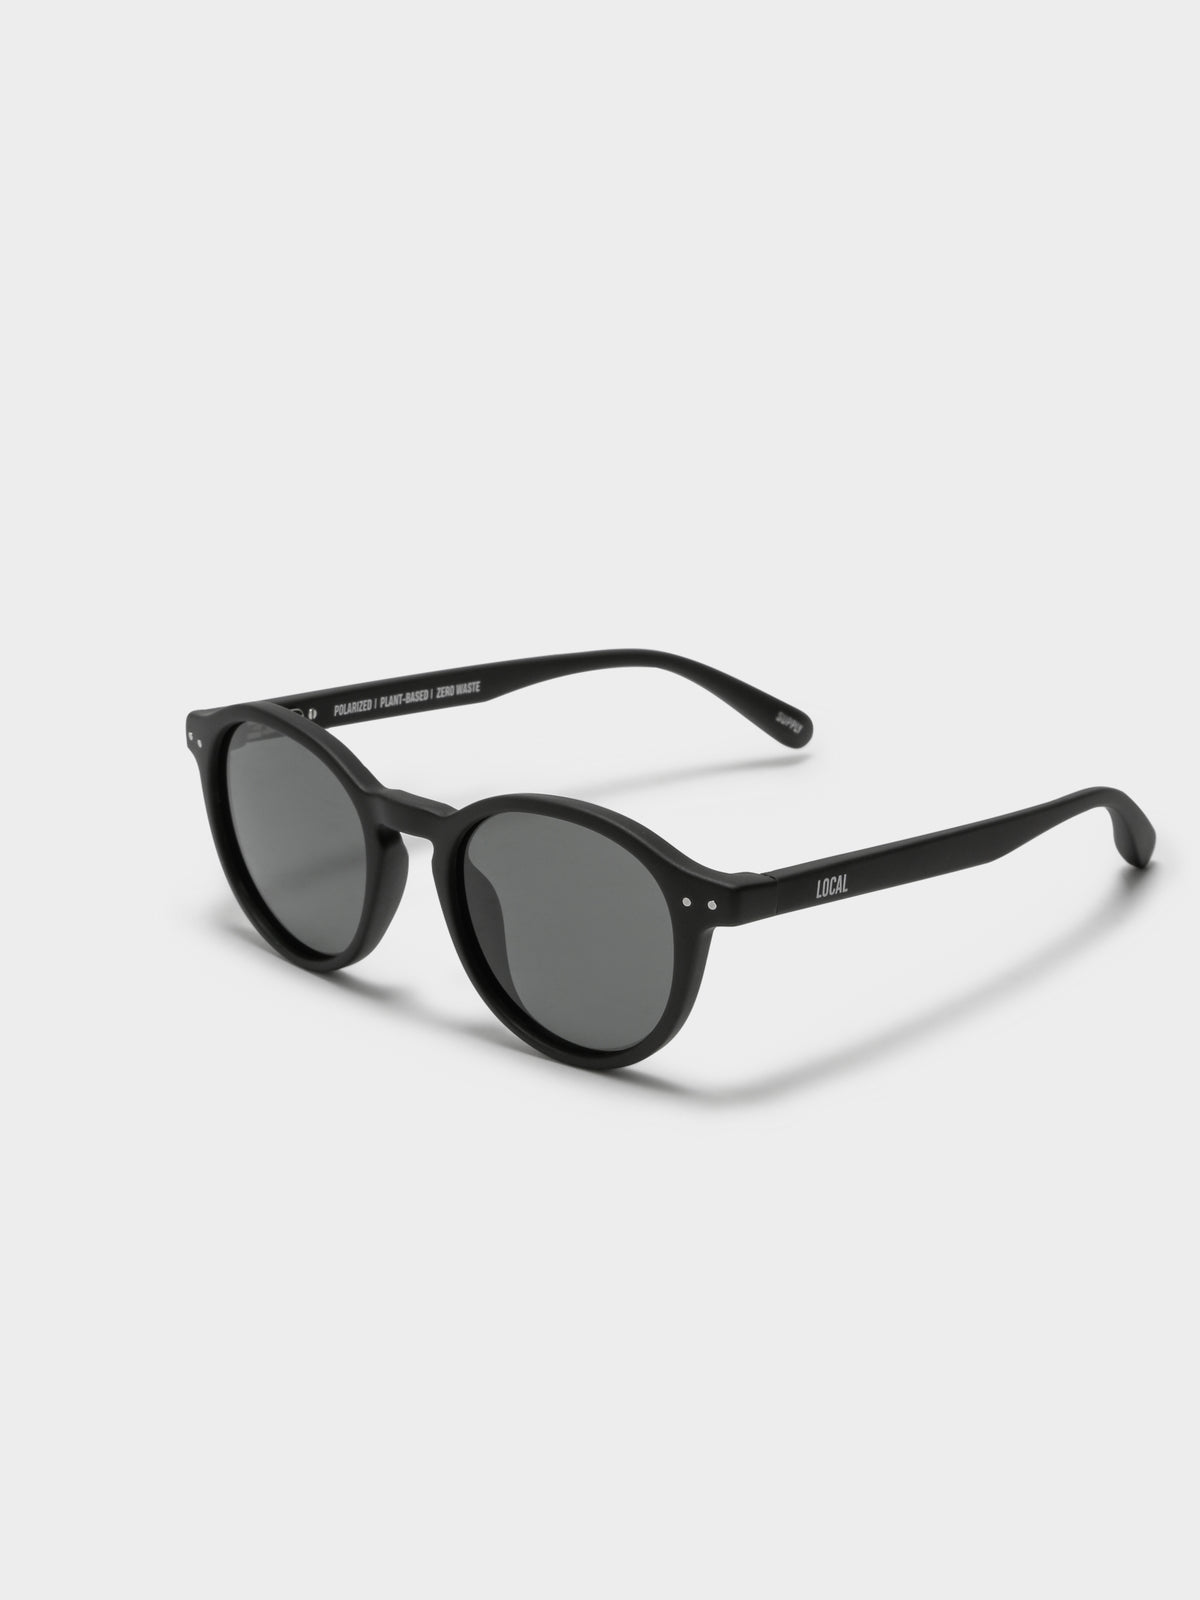 MEL Polarized Sunglasses in Matte Black